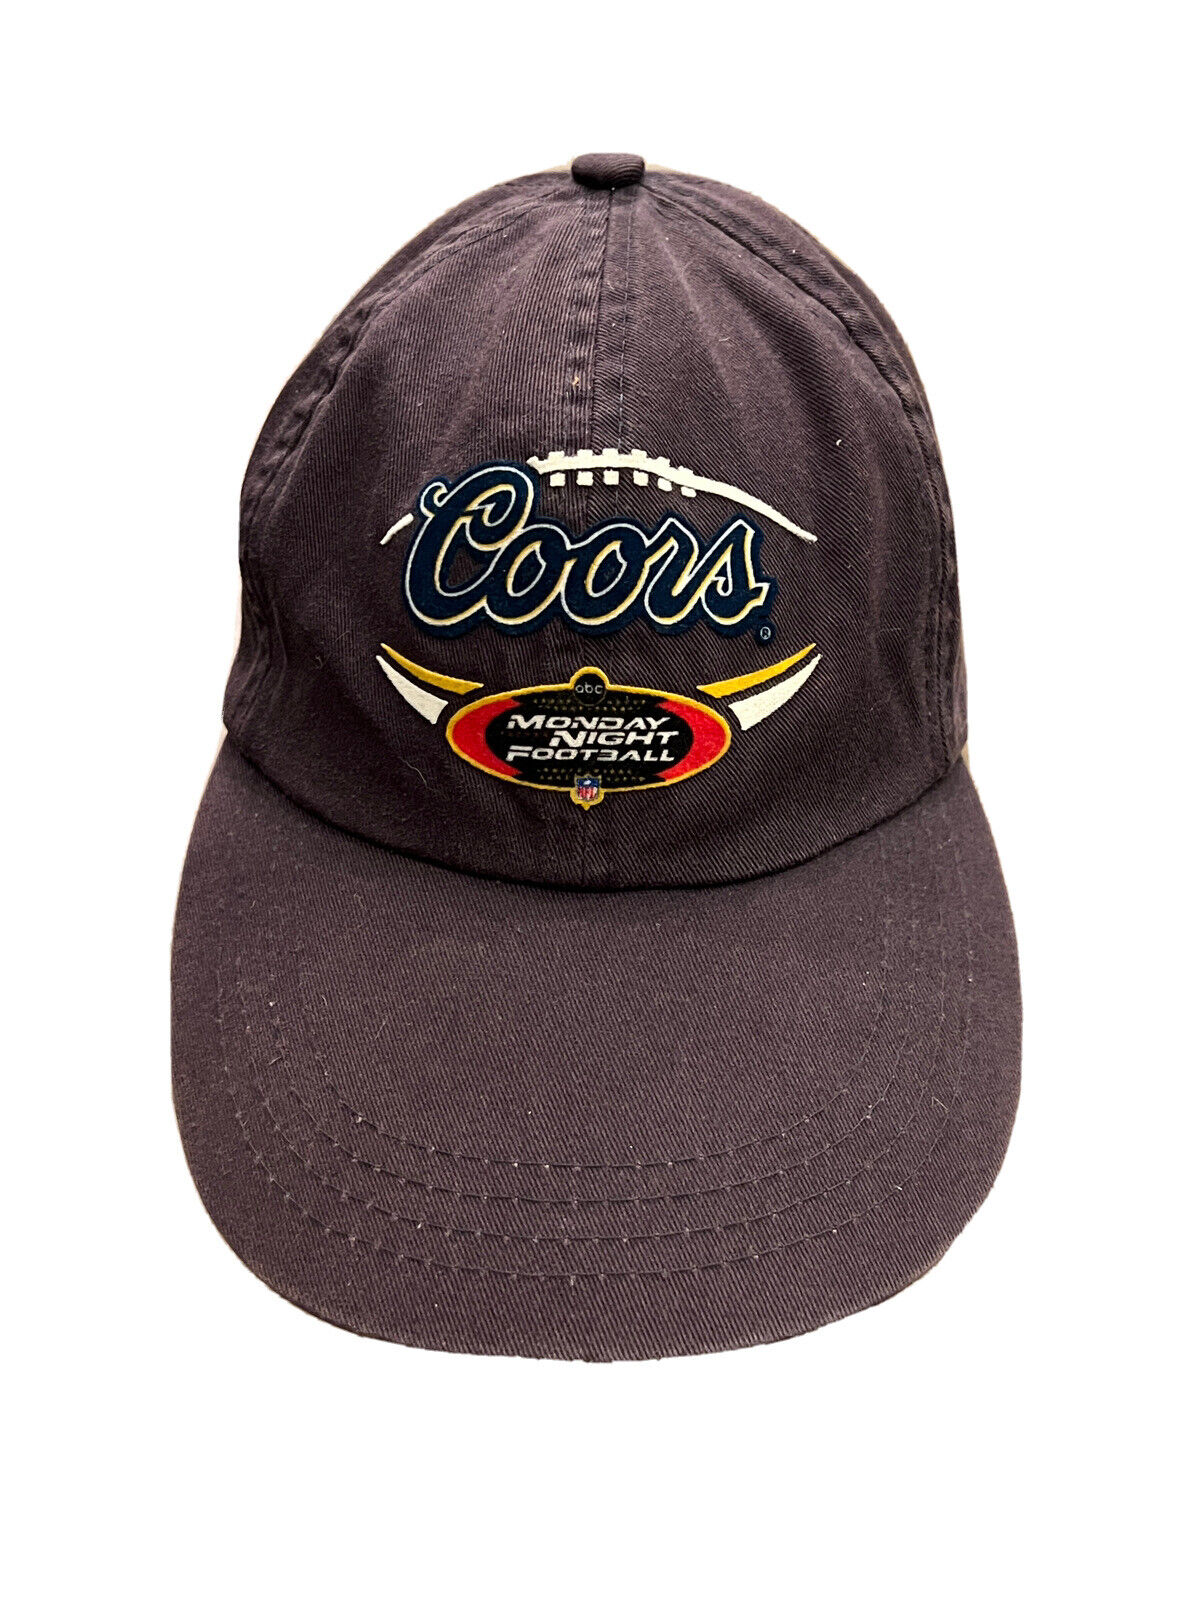 Vintage Nissin Mens Dark Gray Coors Monday Night Football Strapback Hat Cap